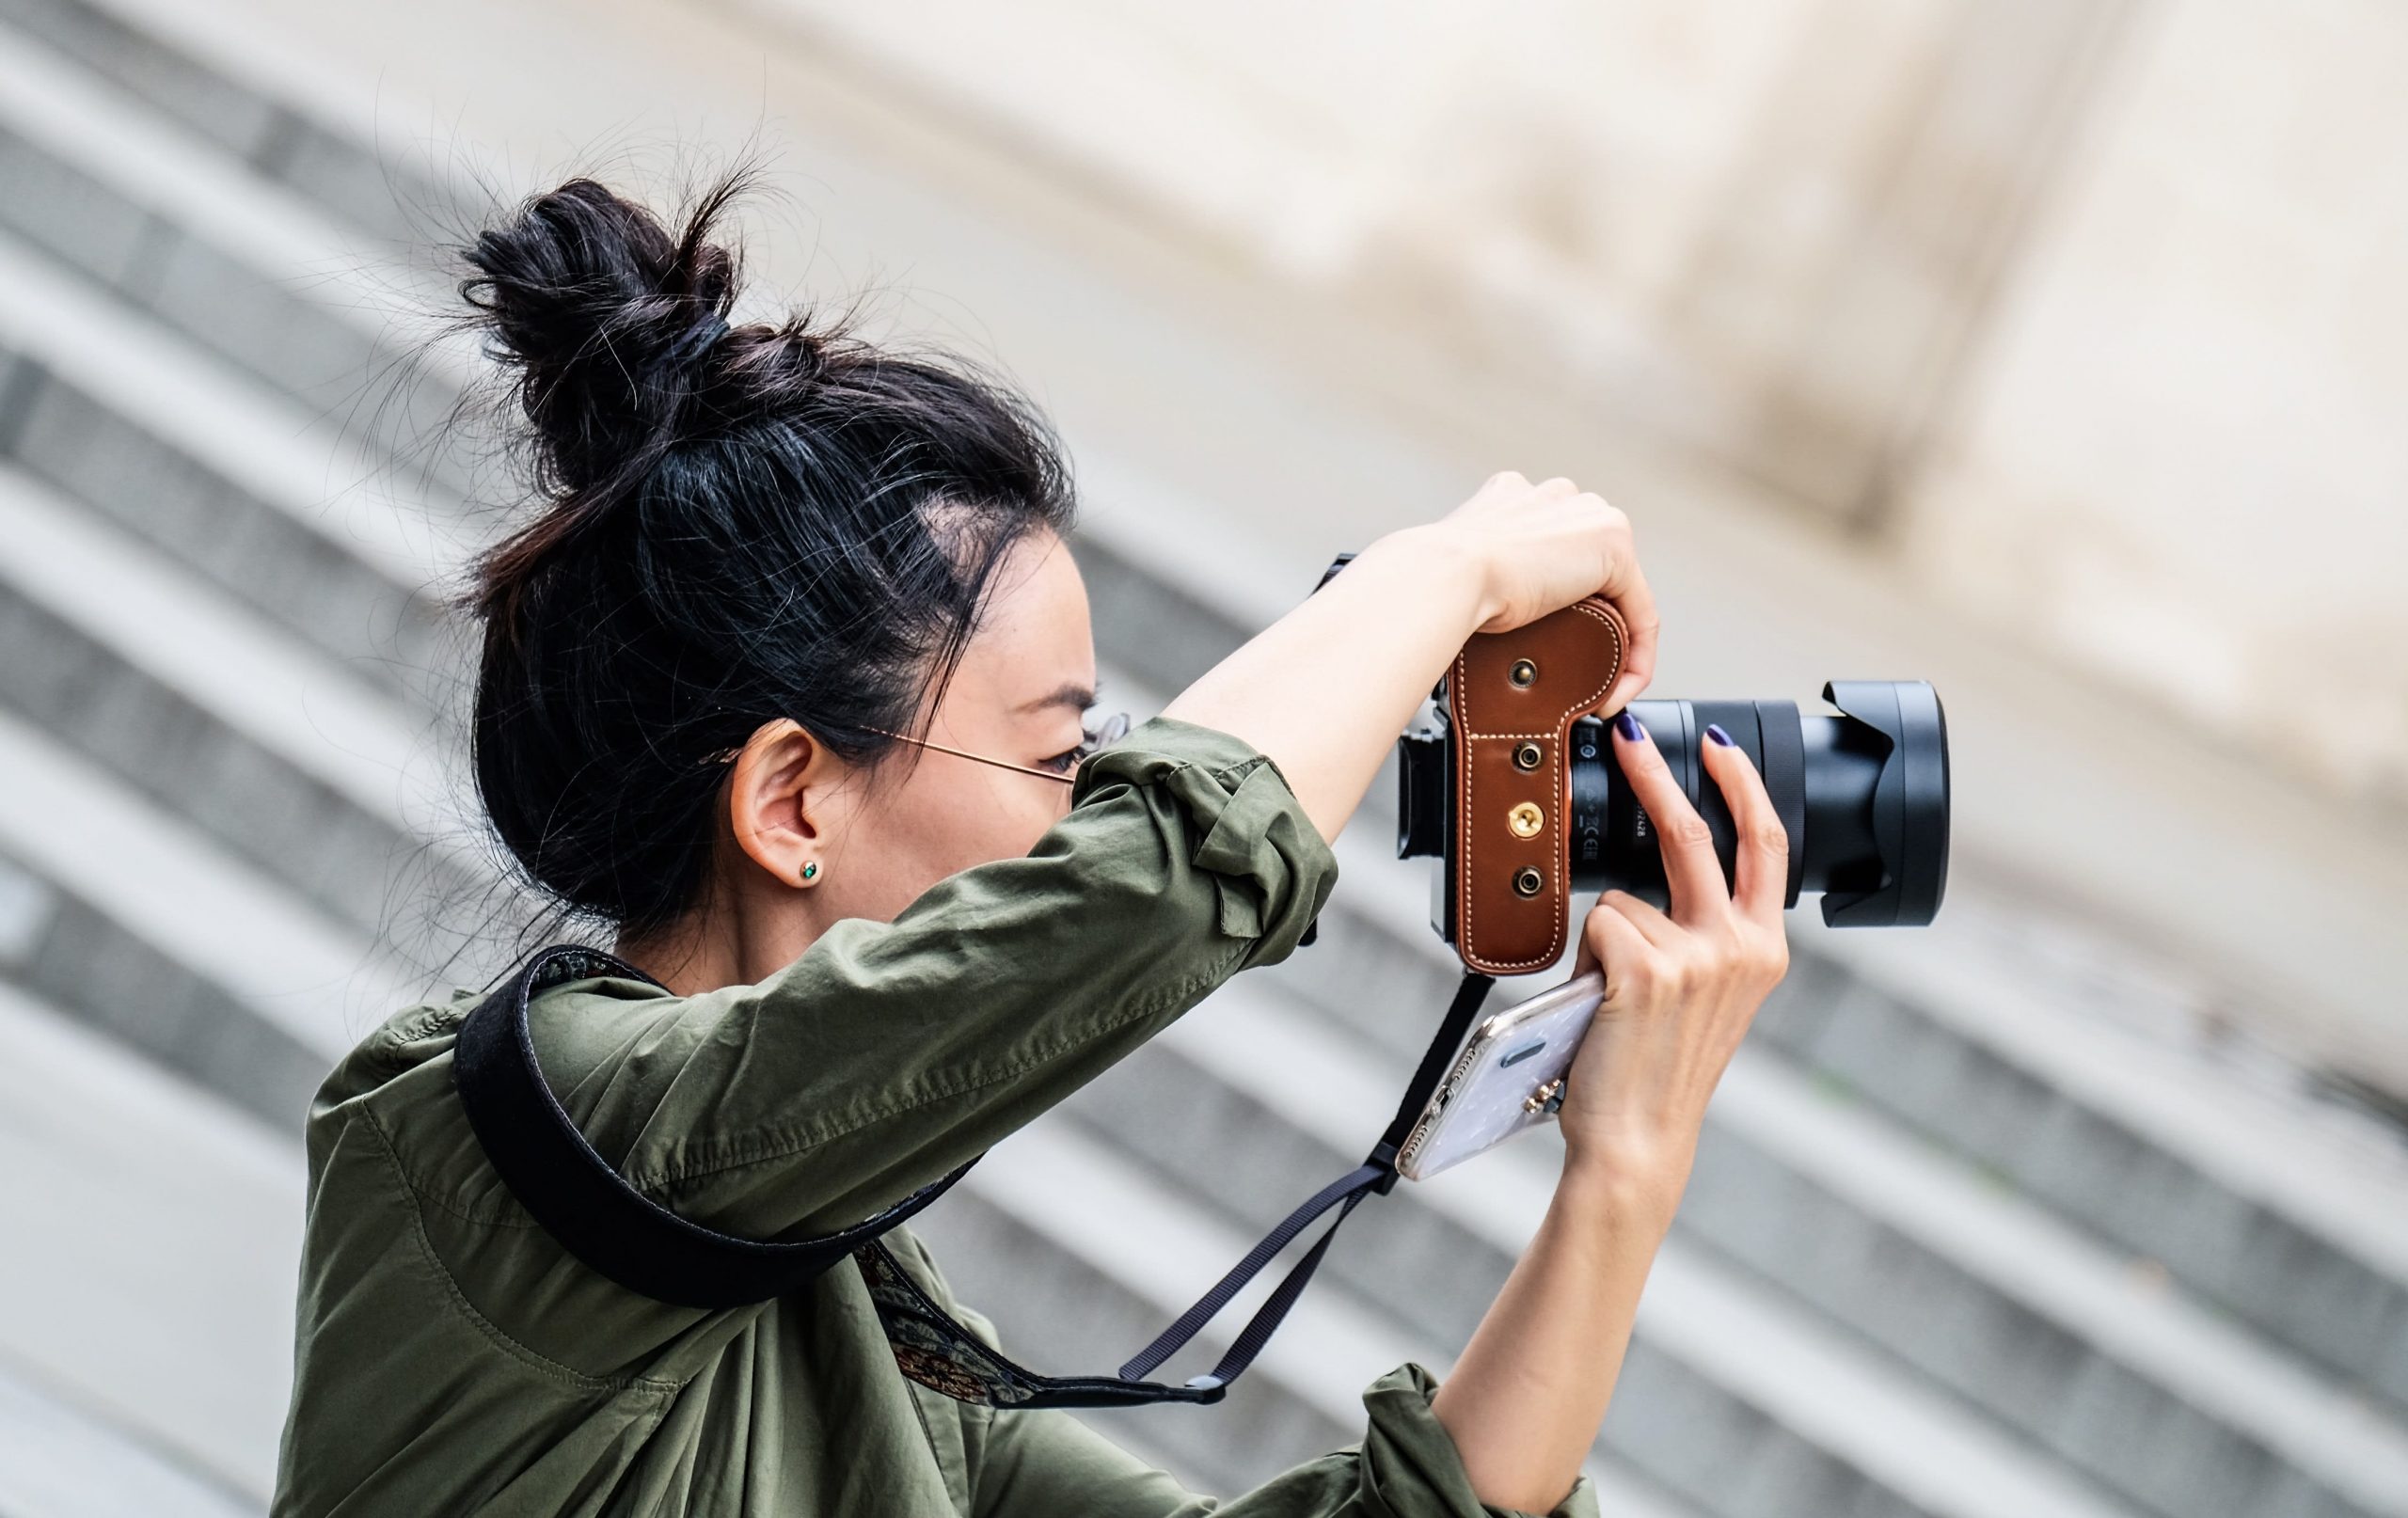 How To Become A Professional Photographer? Equipment, Portfolio & So On